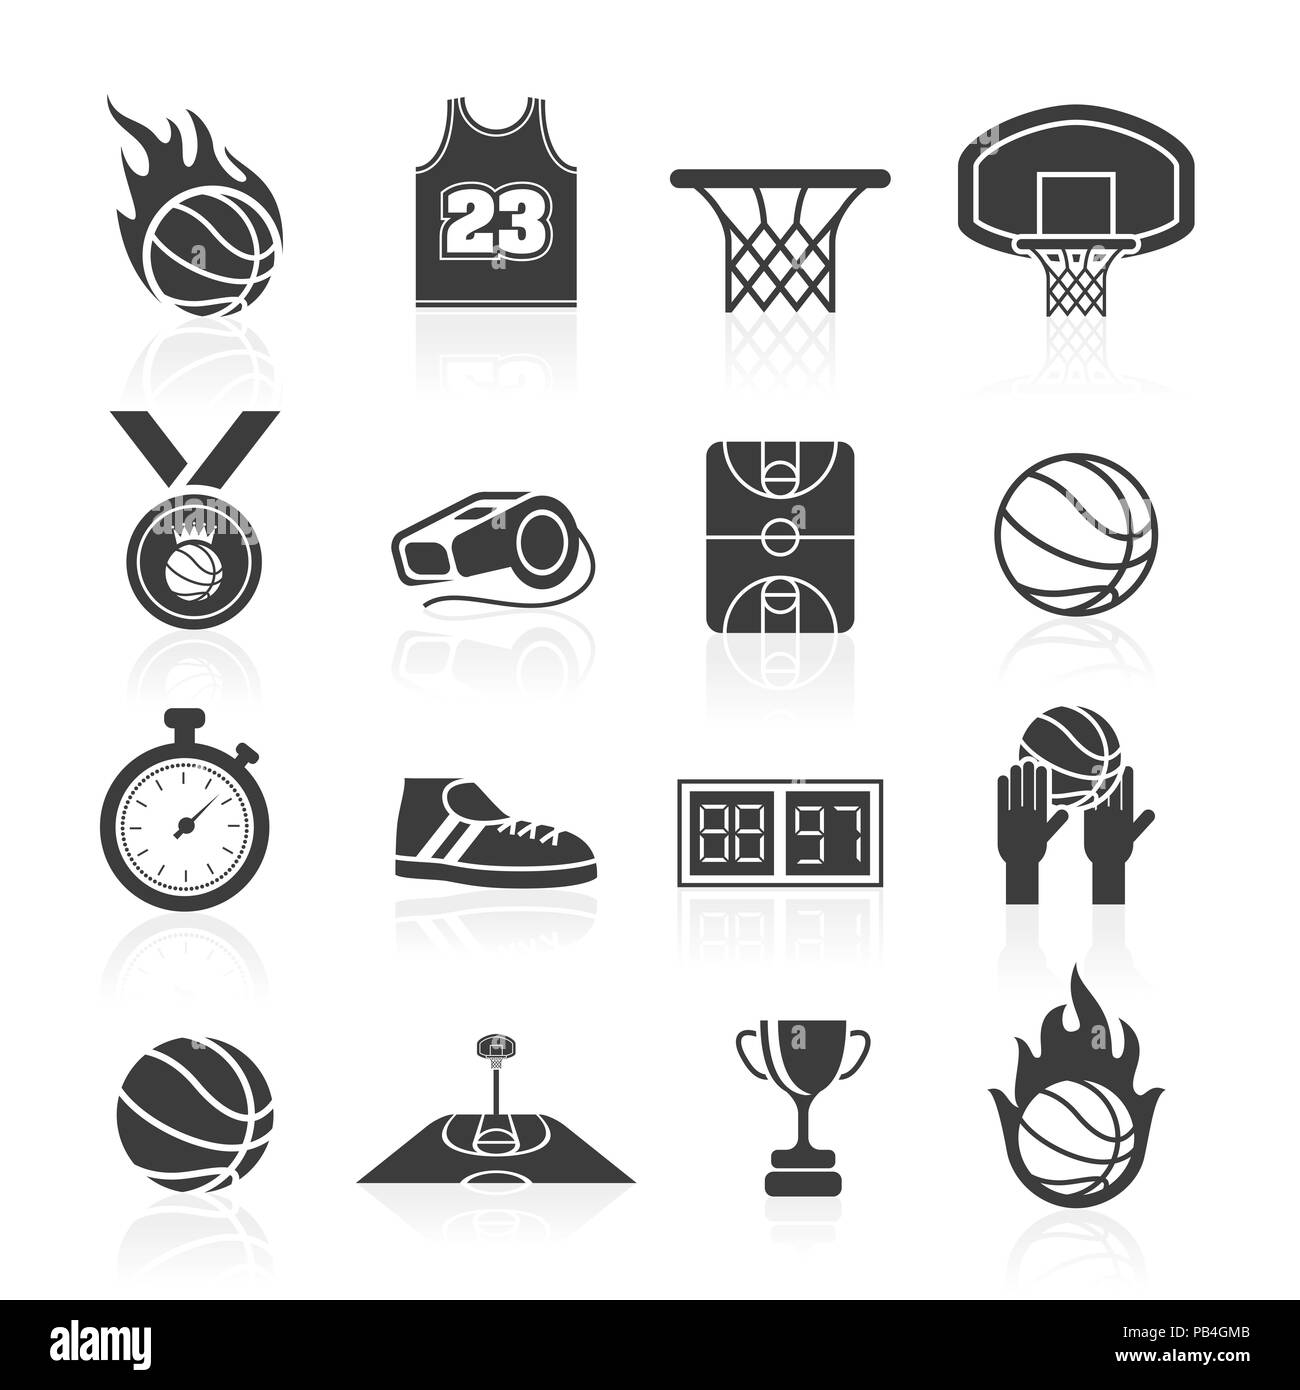 Basketball banner Banque d'images noir et blanc - Alamy